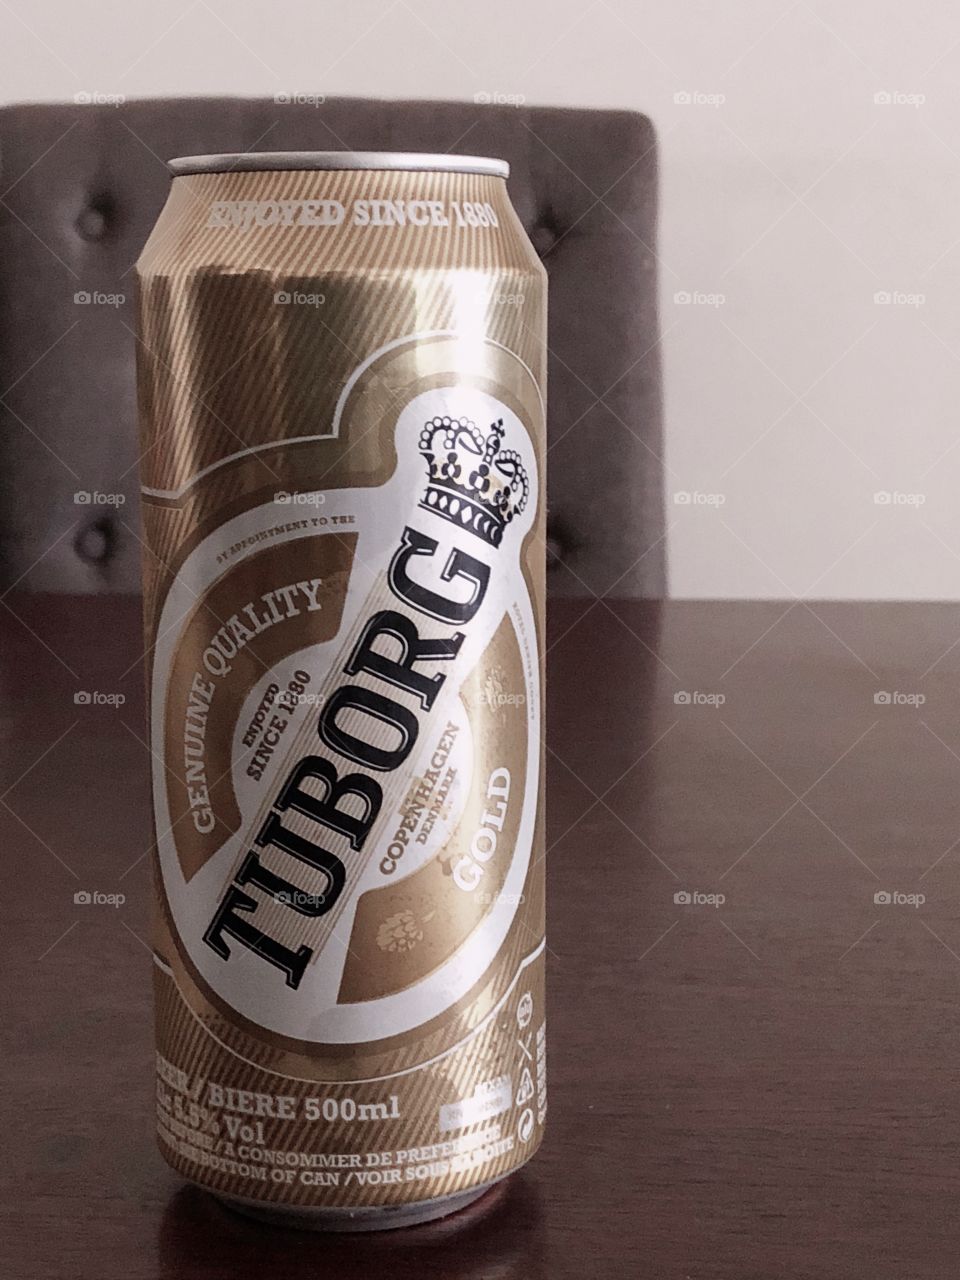 Tuborg beer